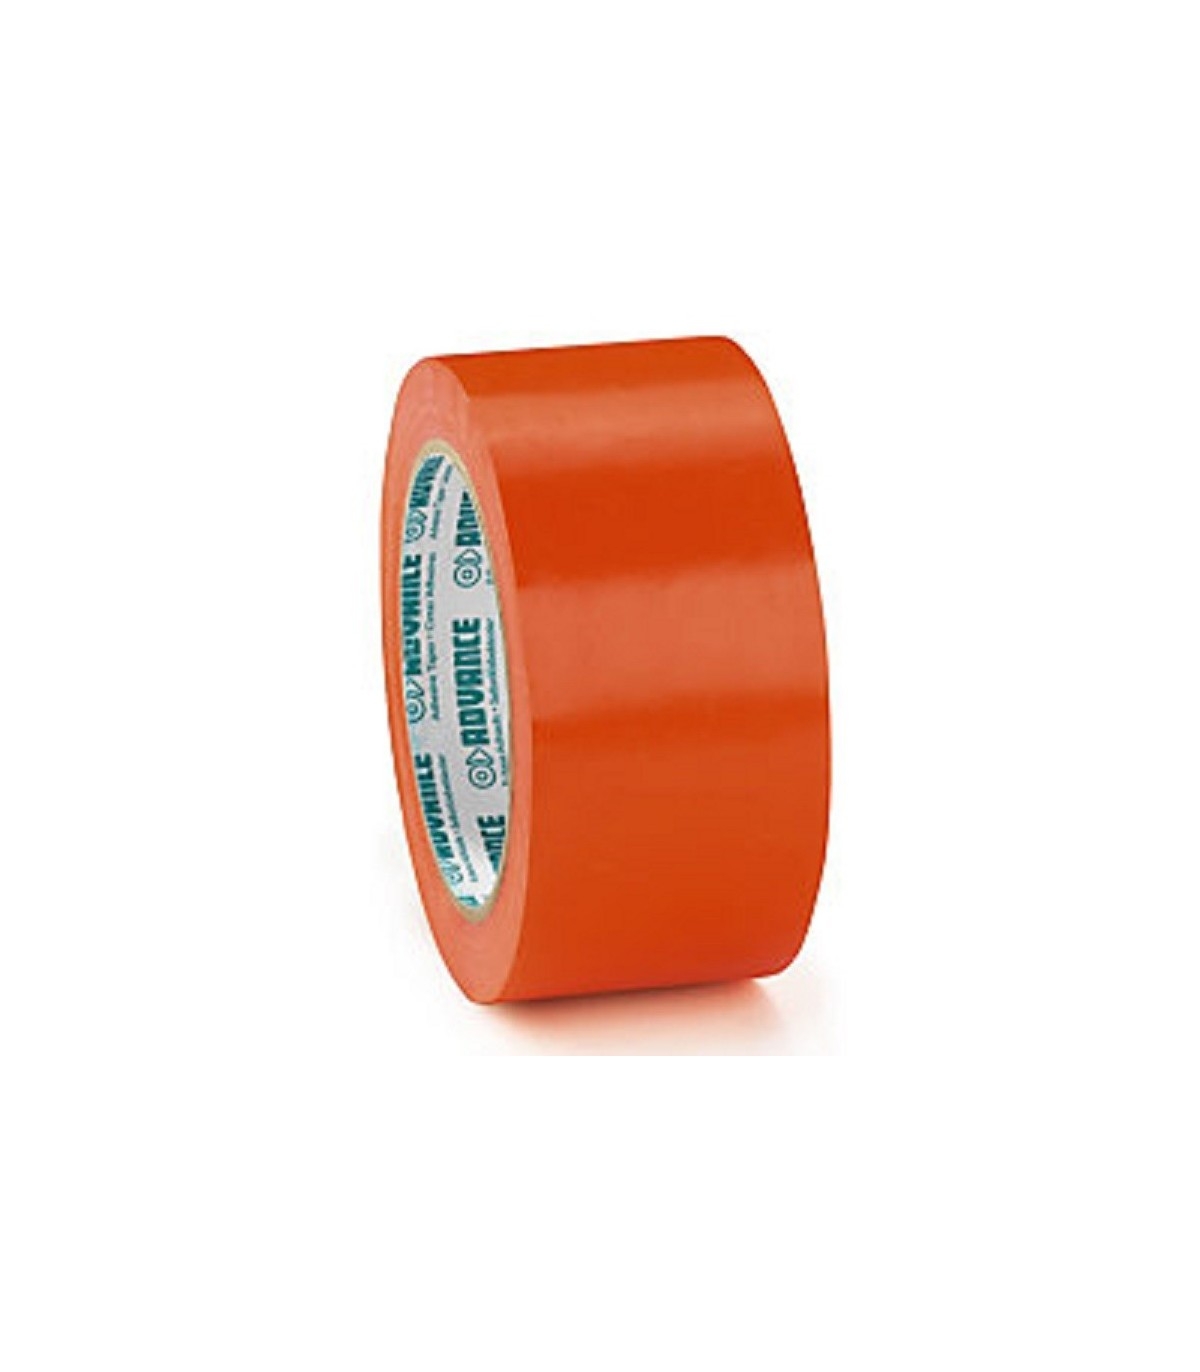 Ruban adhésif PVC Orange 50mm x 33 - x6